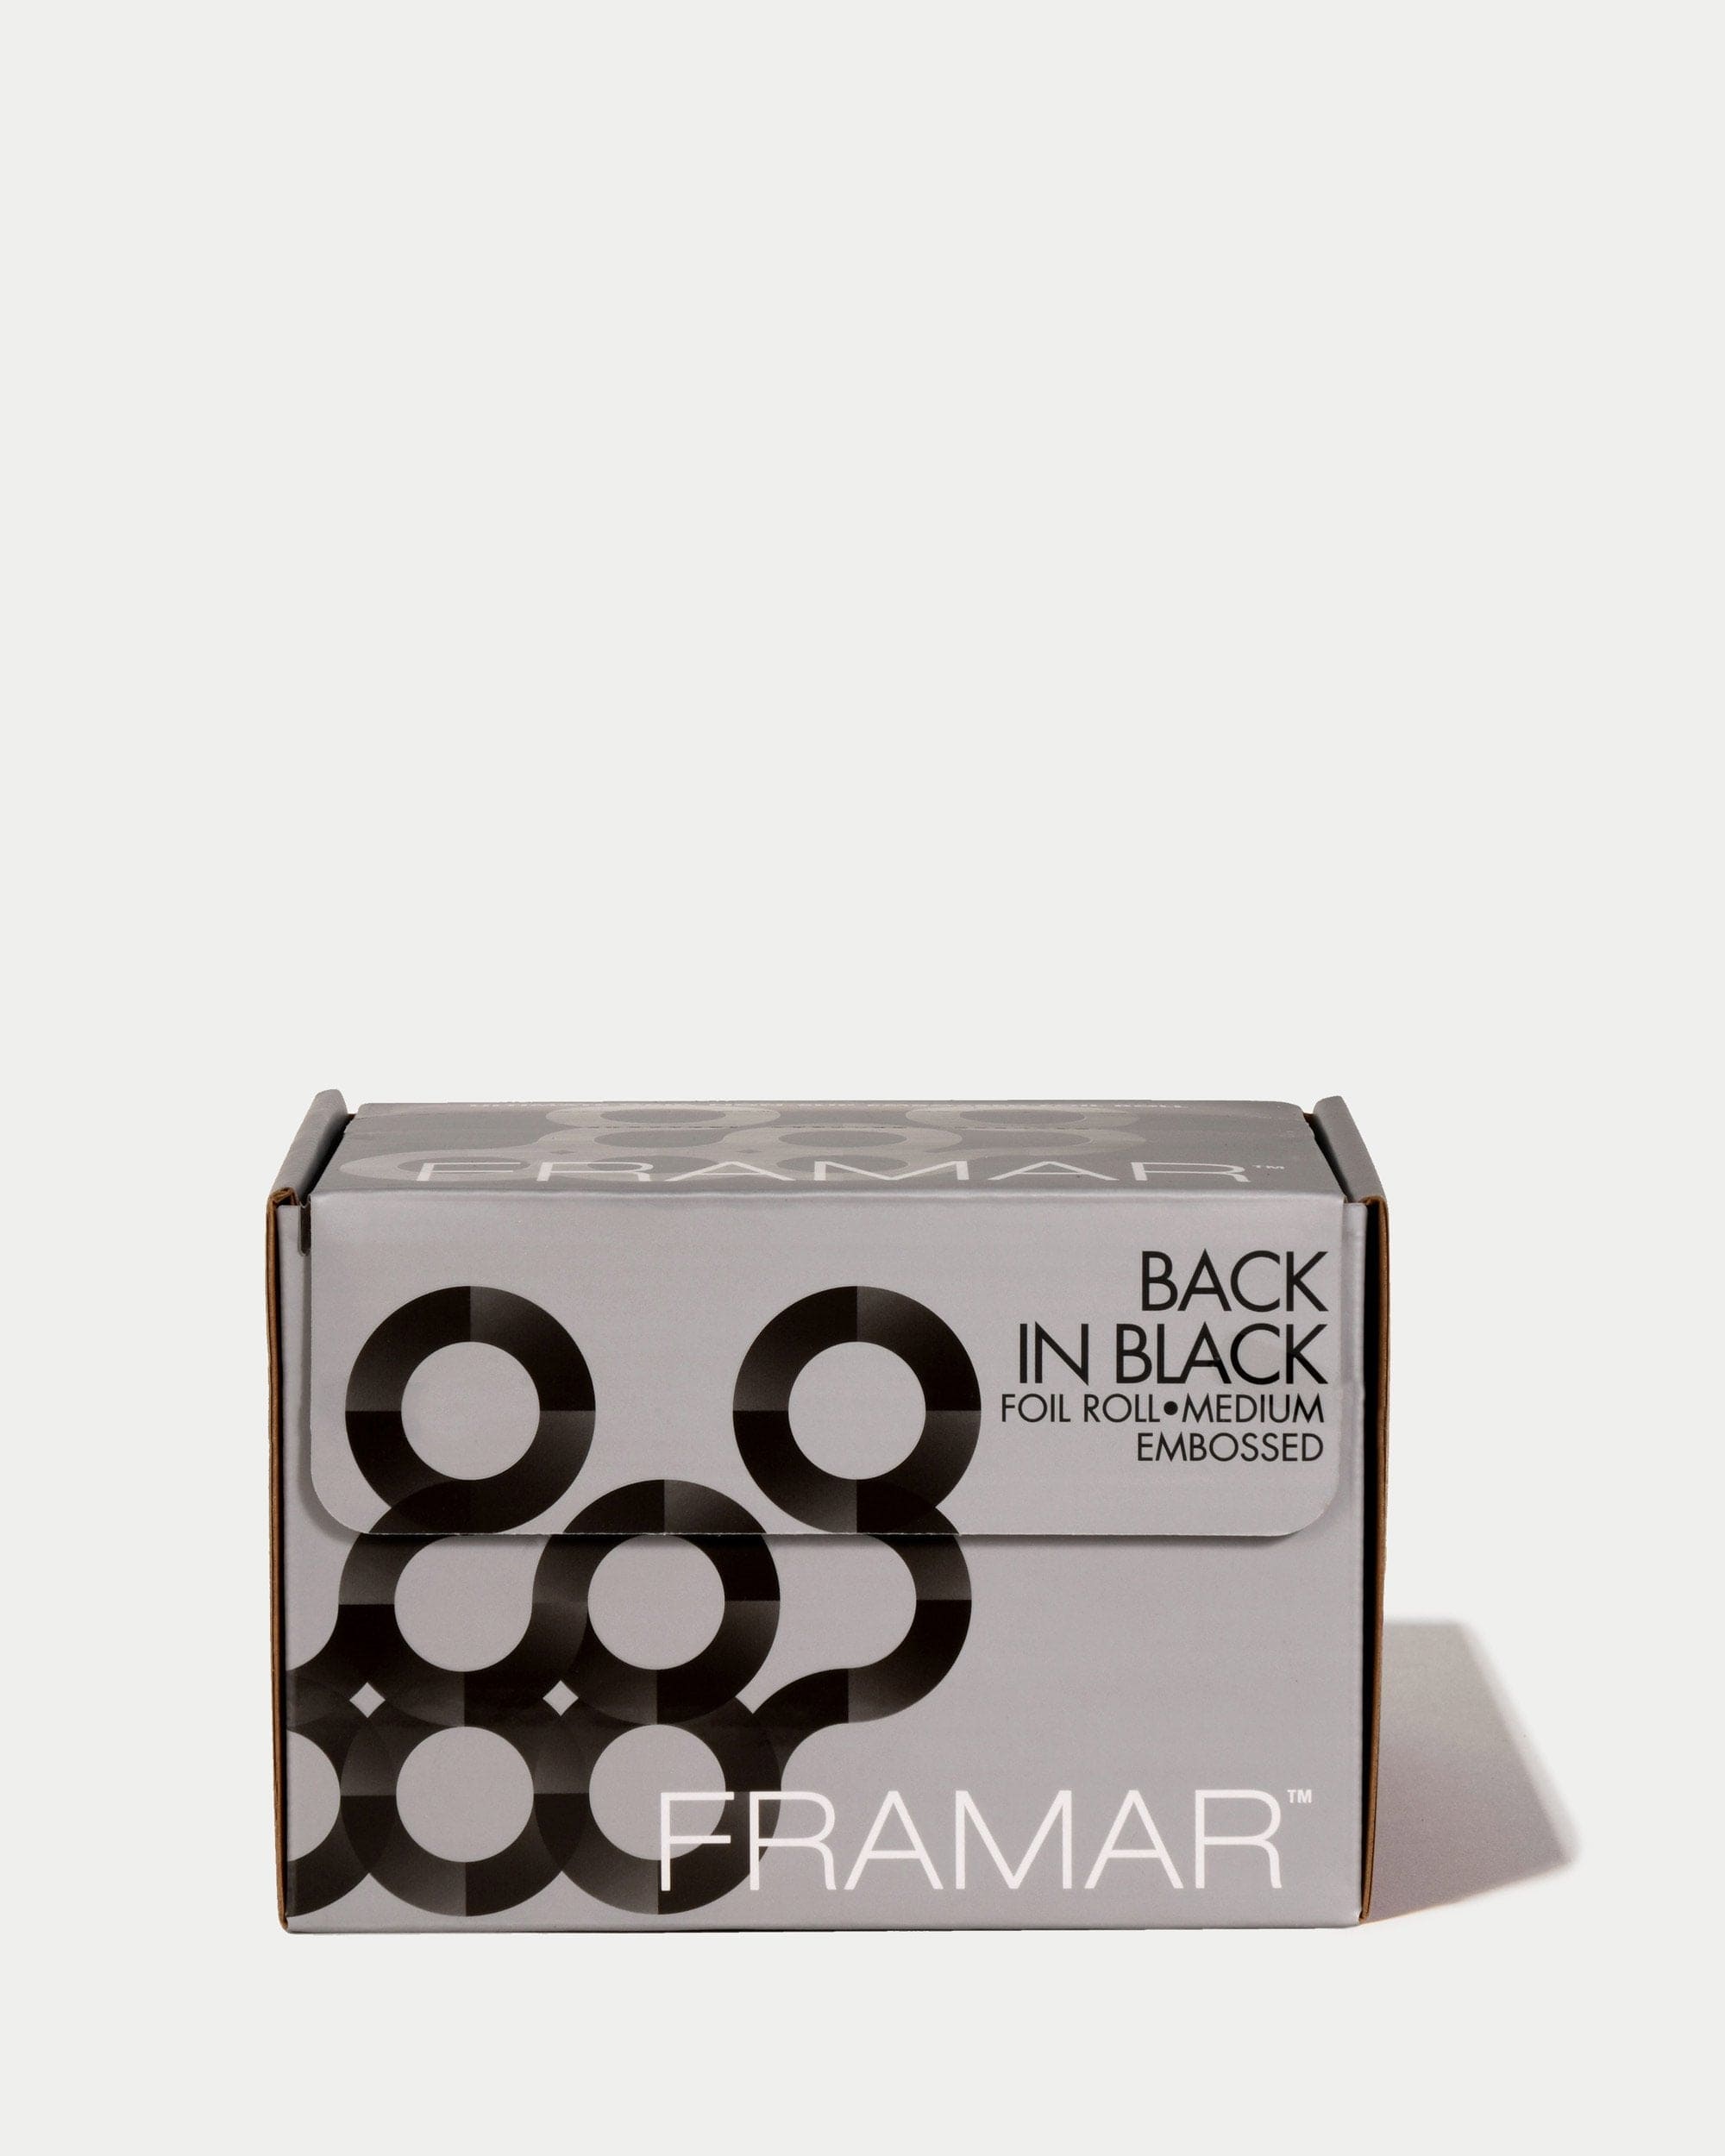 Back in Black Embossed Roll - Medium Hair - Framar - Luxe Pacifique